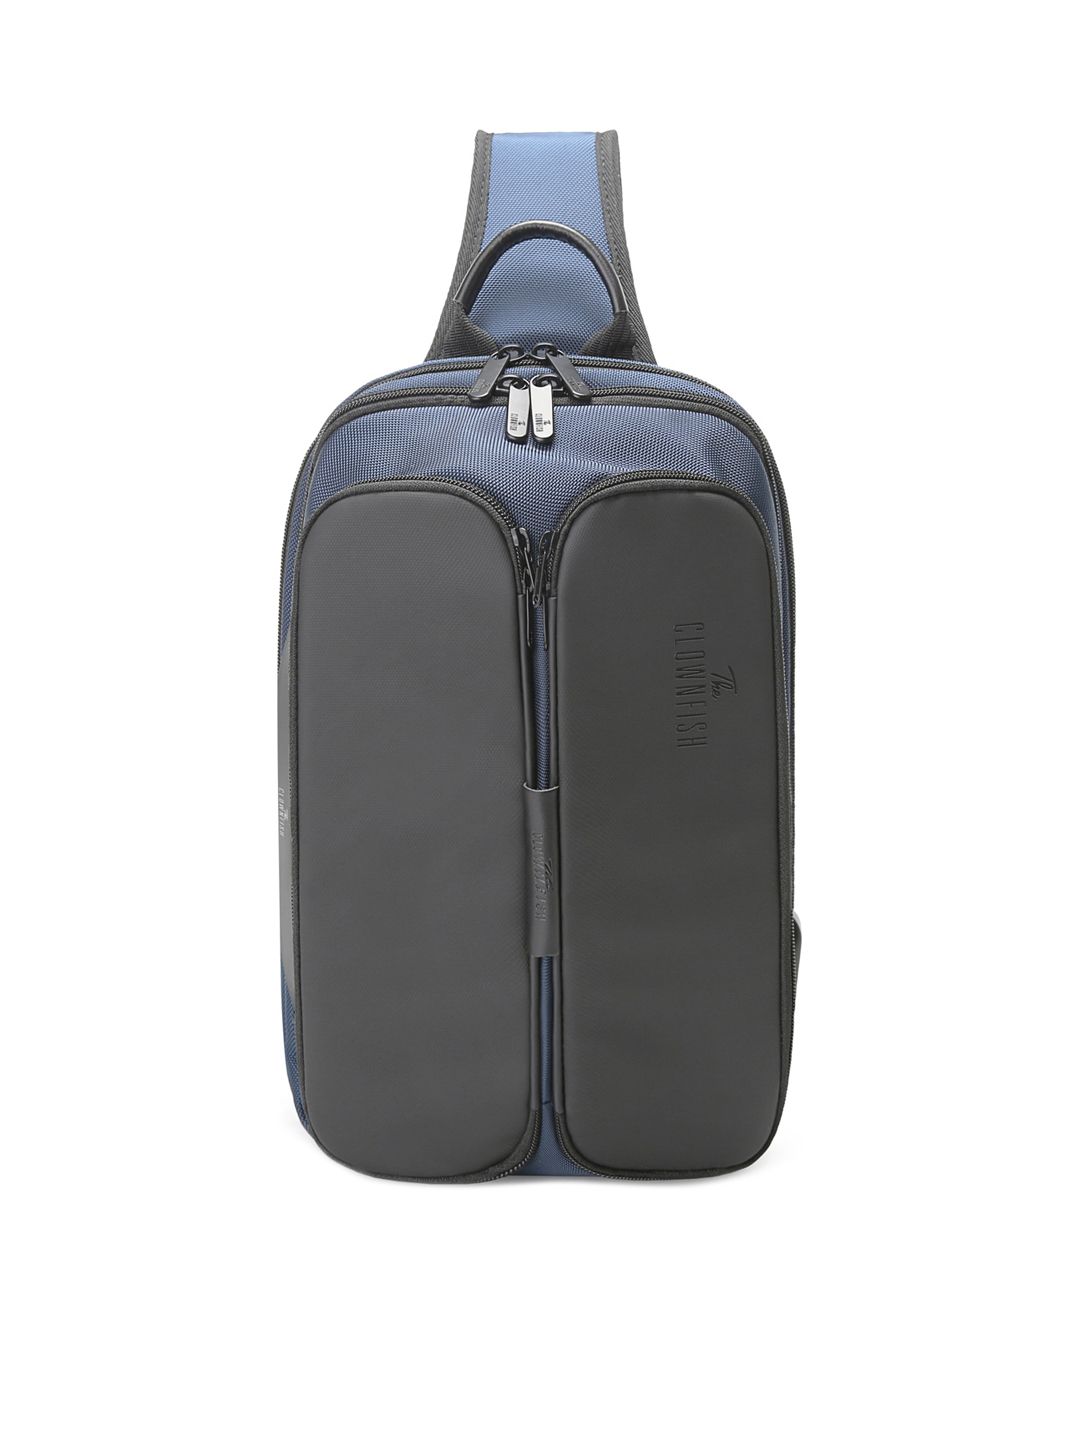 THE CLOWNFISH Unisex Blue Bucket Shoulder Waterproof Crossbody Bag Price in India